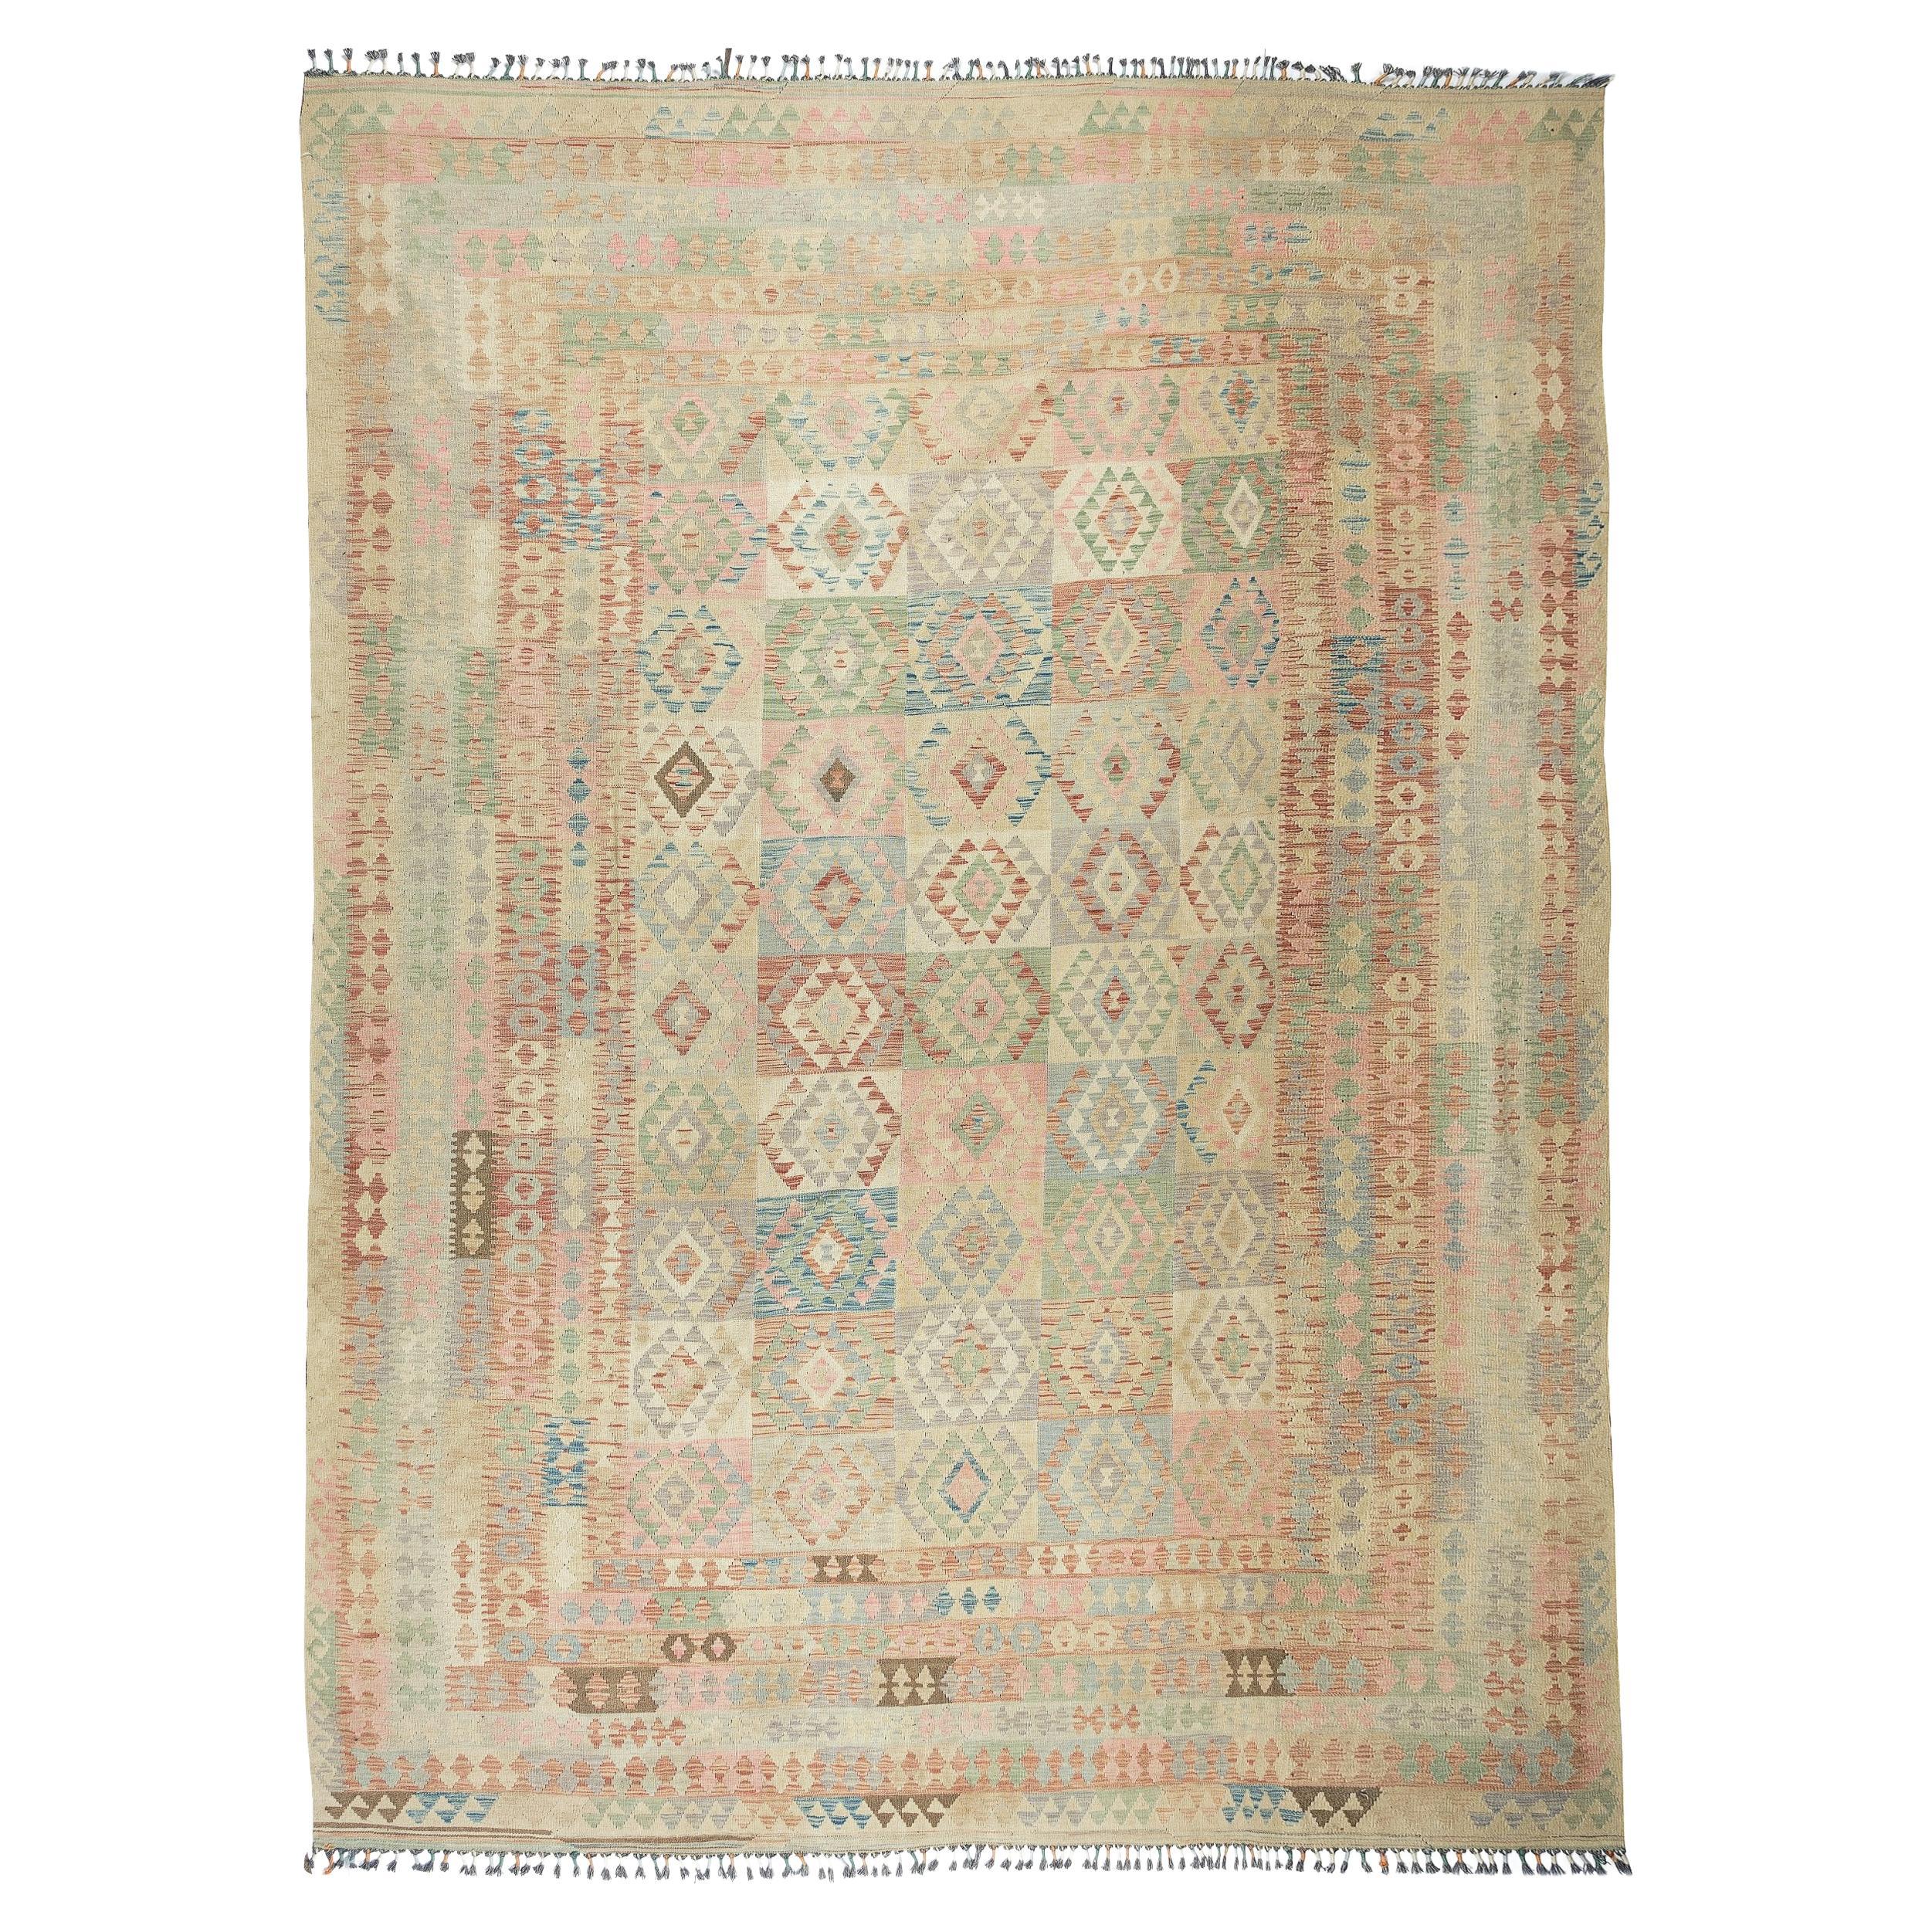 9.6x13.3 Ft Vintage Turkish Kilim Rug, Flatweave Wool Carpet, Soft Pastel Colors